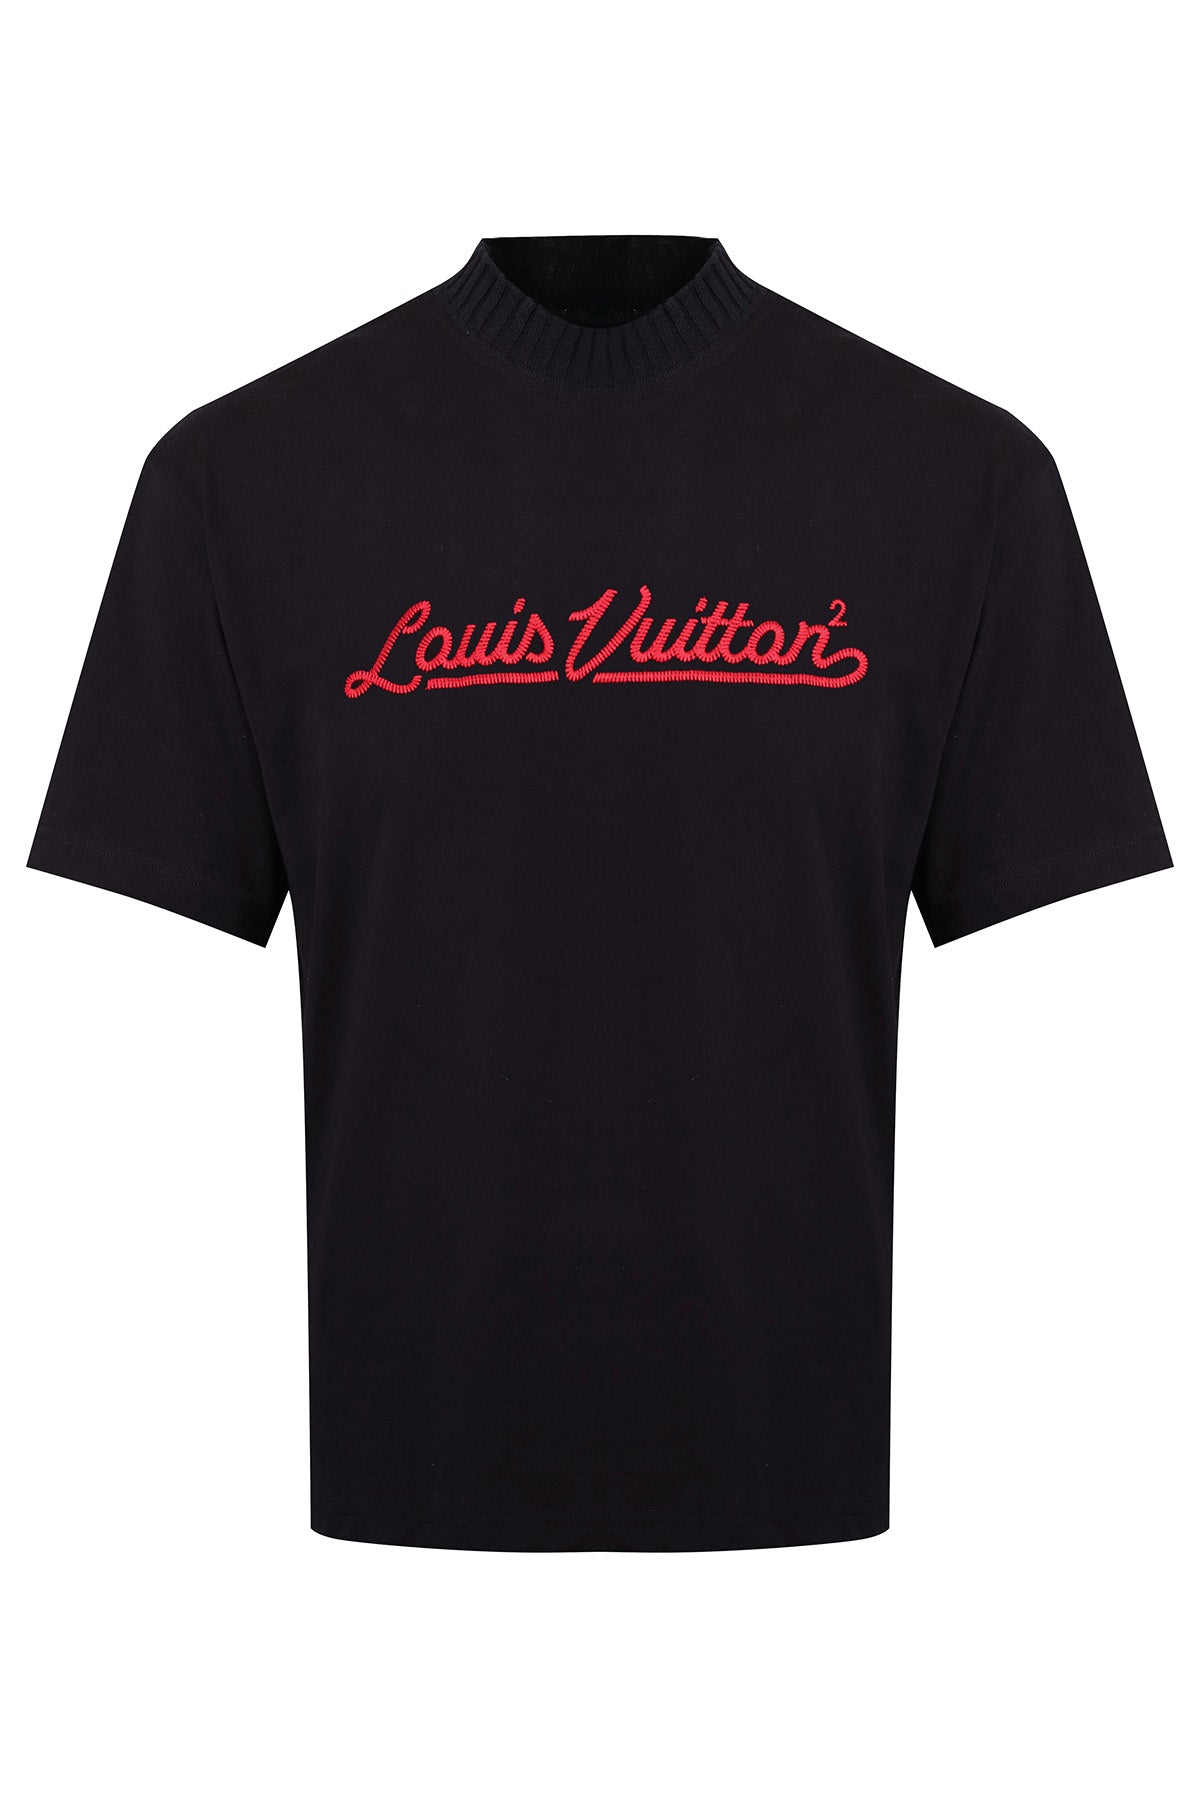 Used Louis Vuitton Made X Nigo Tshirt LV 2 Sweater Human Made Bape Size M   eBay